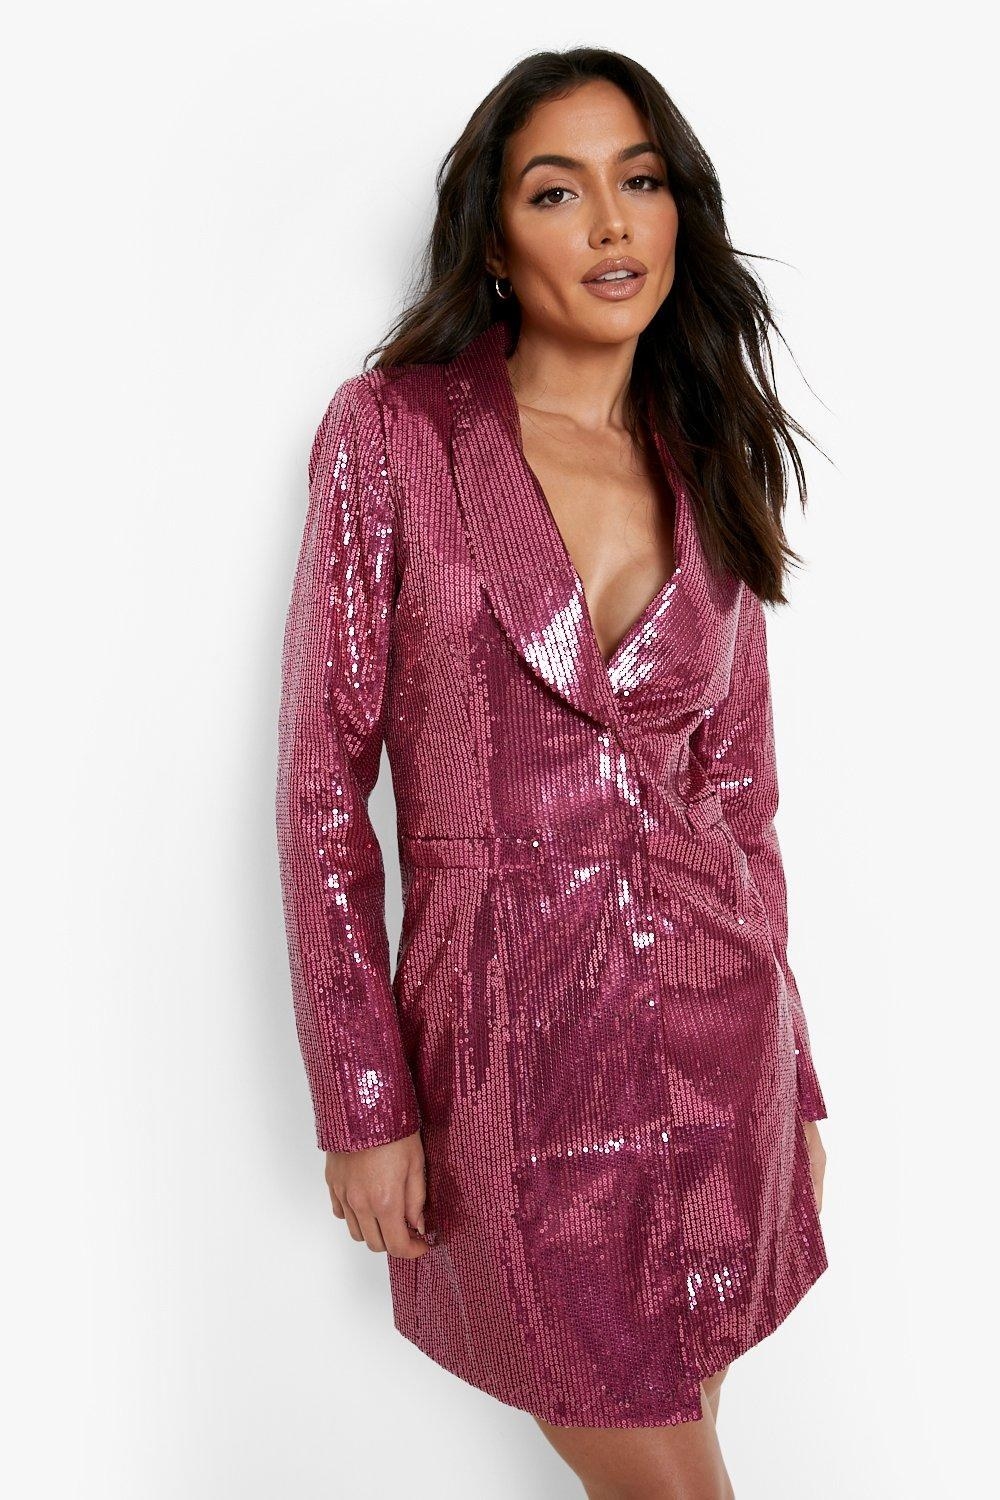 Model wearing pink sequin blazer dress, stops mid thigh